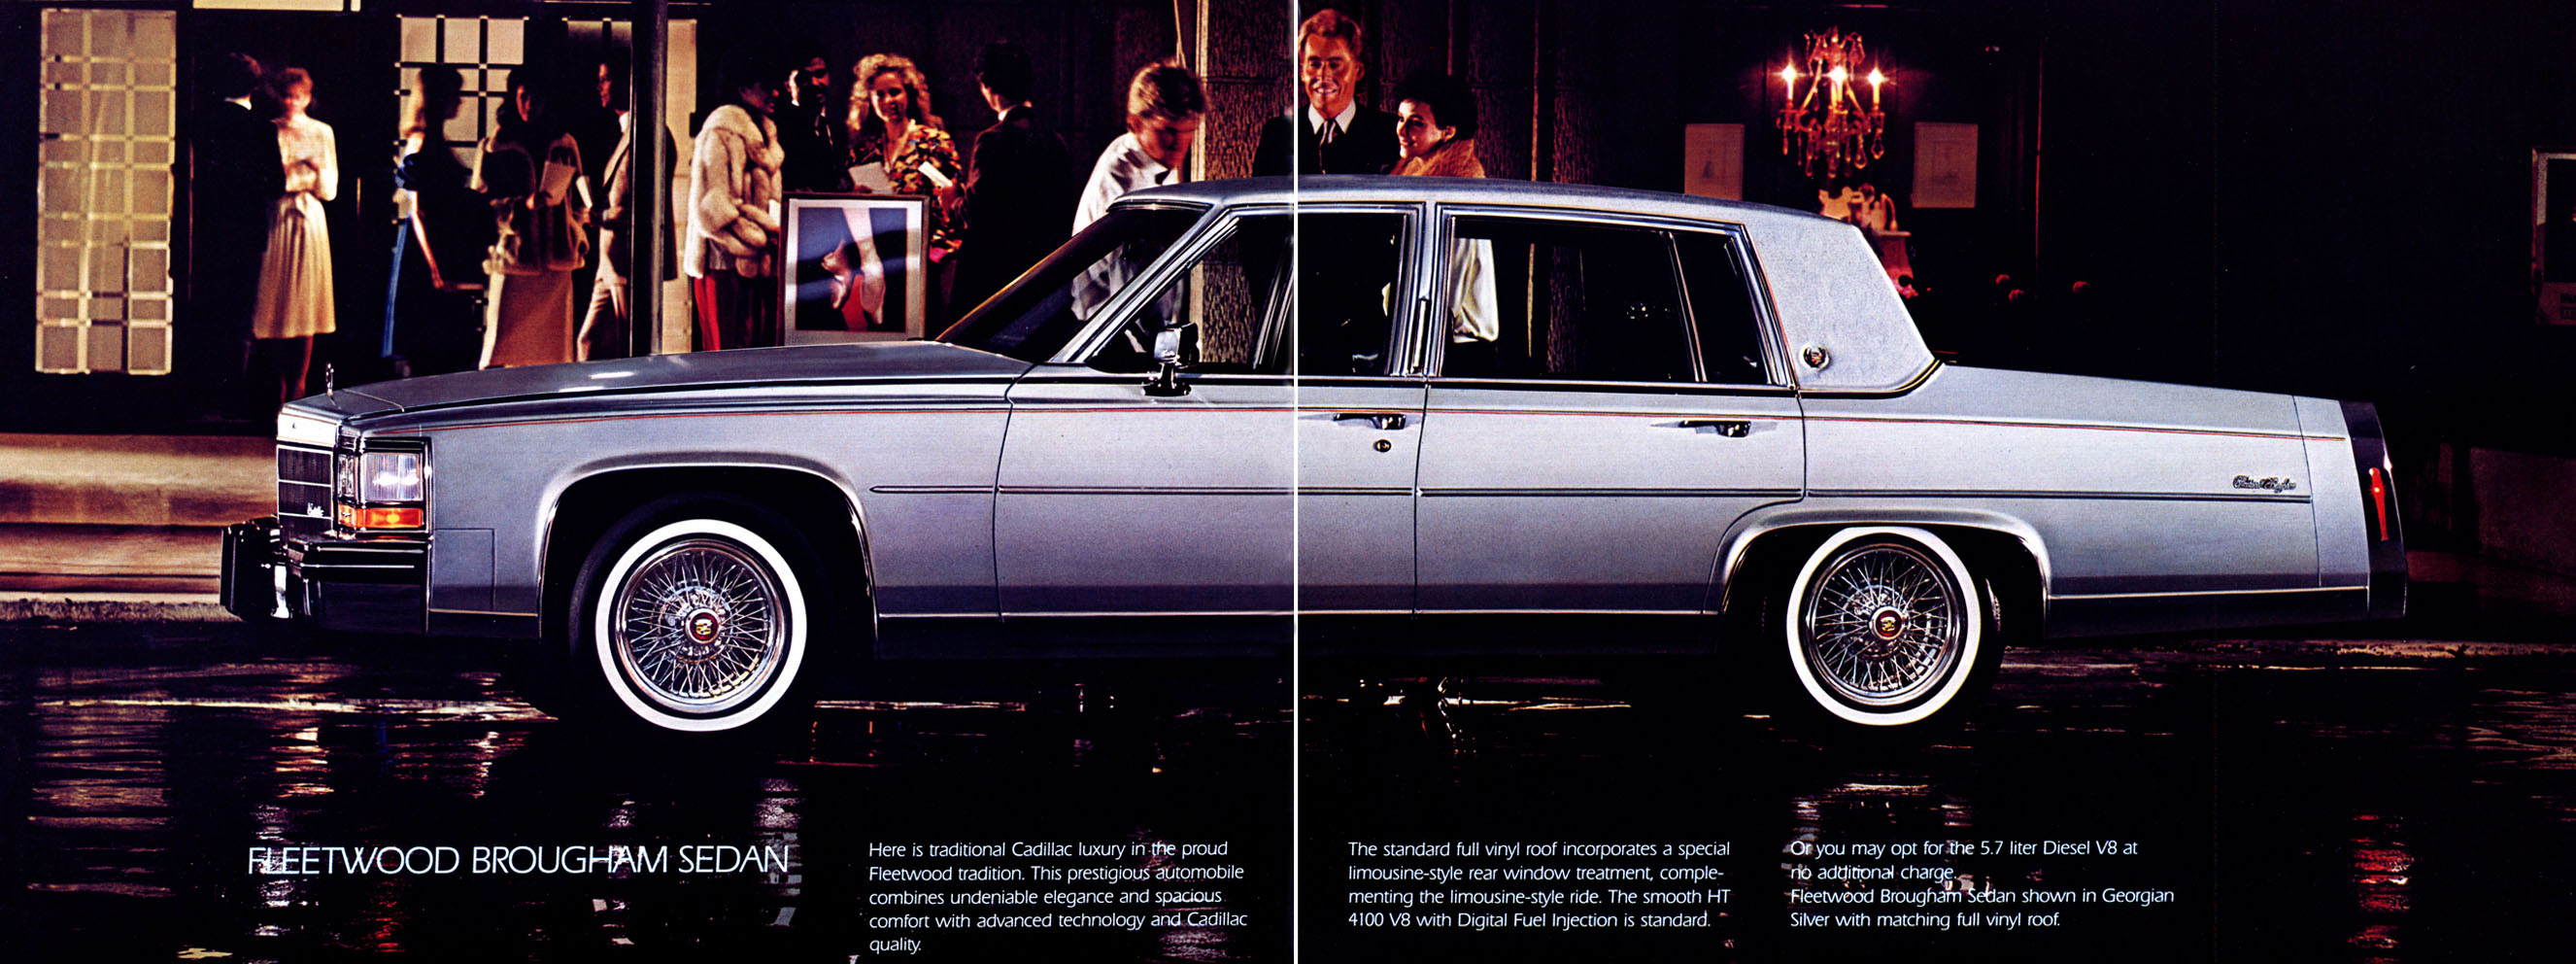 1984_Cadillac-08-09